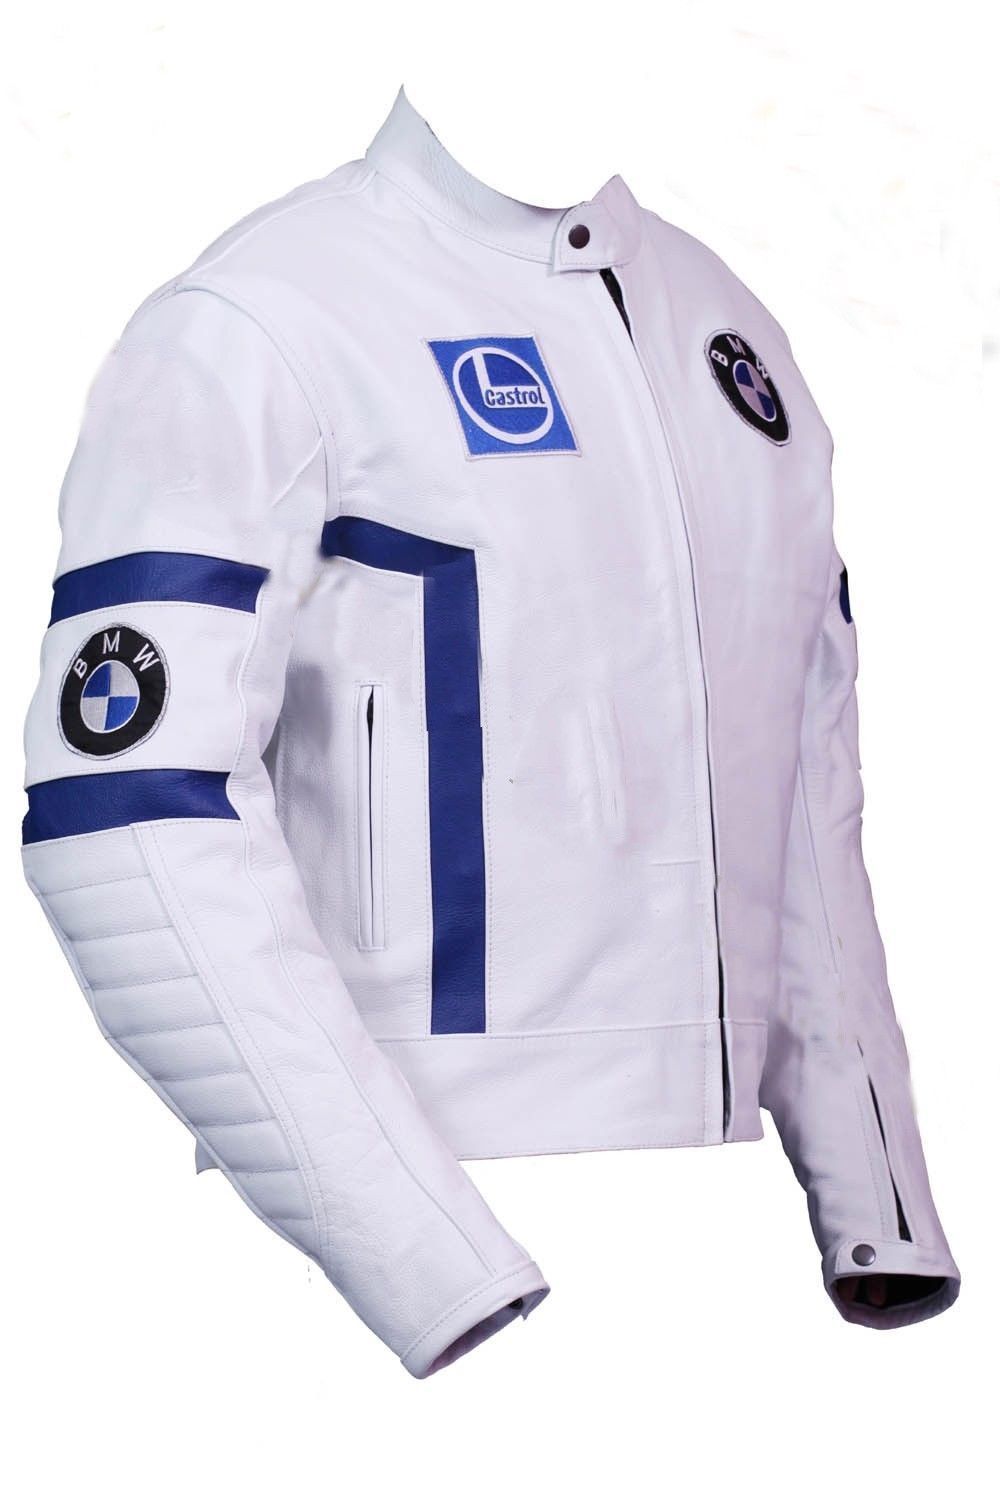 Mens White BMW Motorcycle Racing Biker Leather Jacket XS